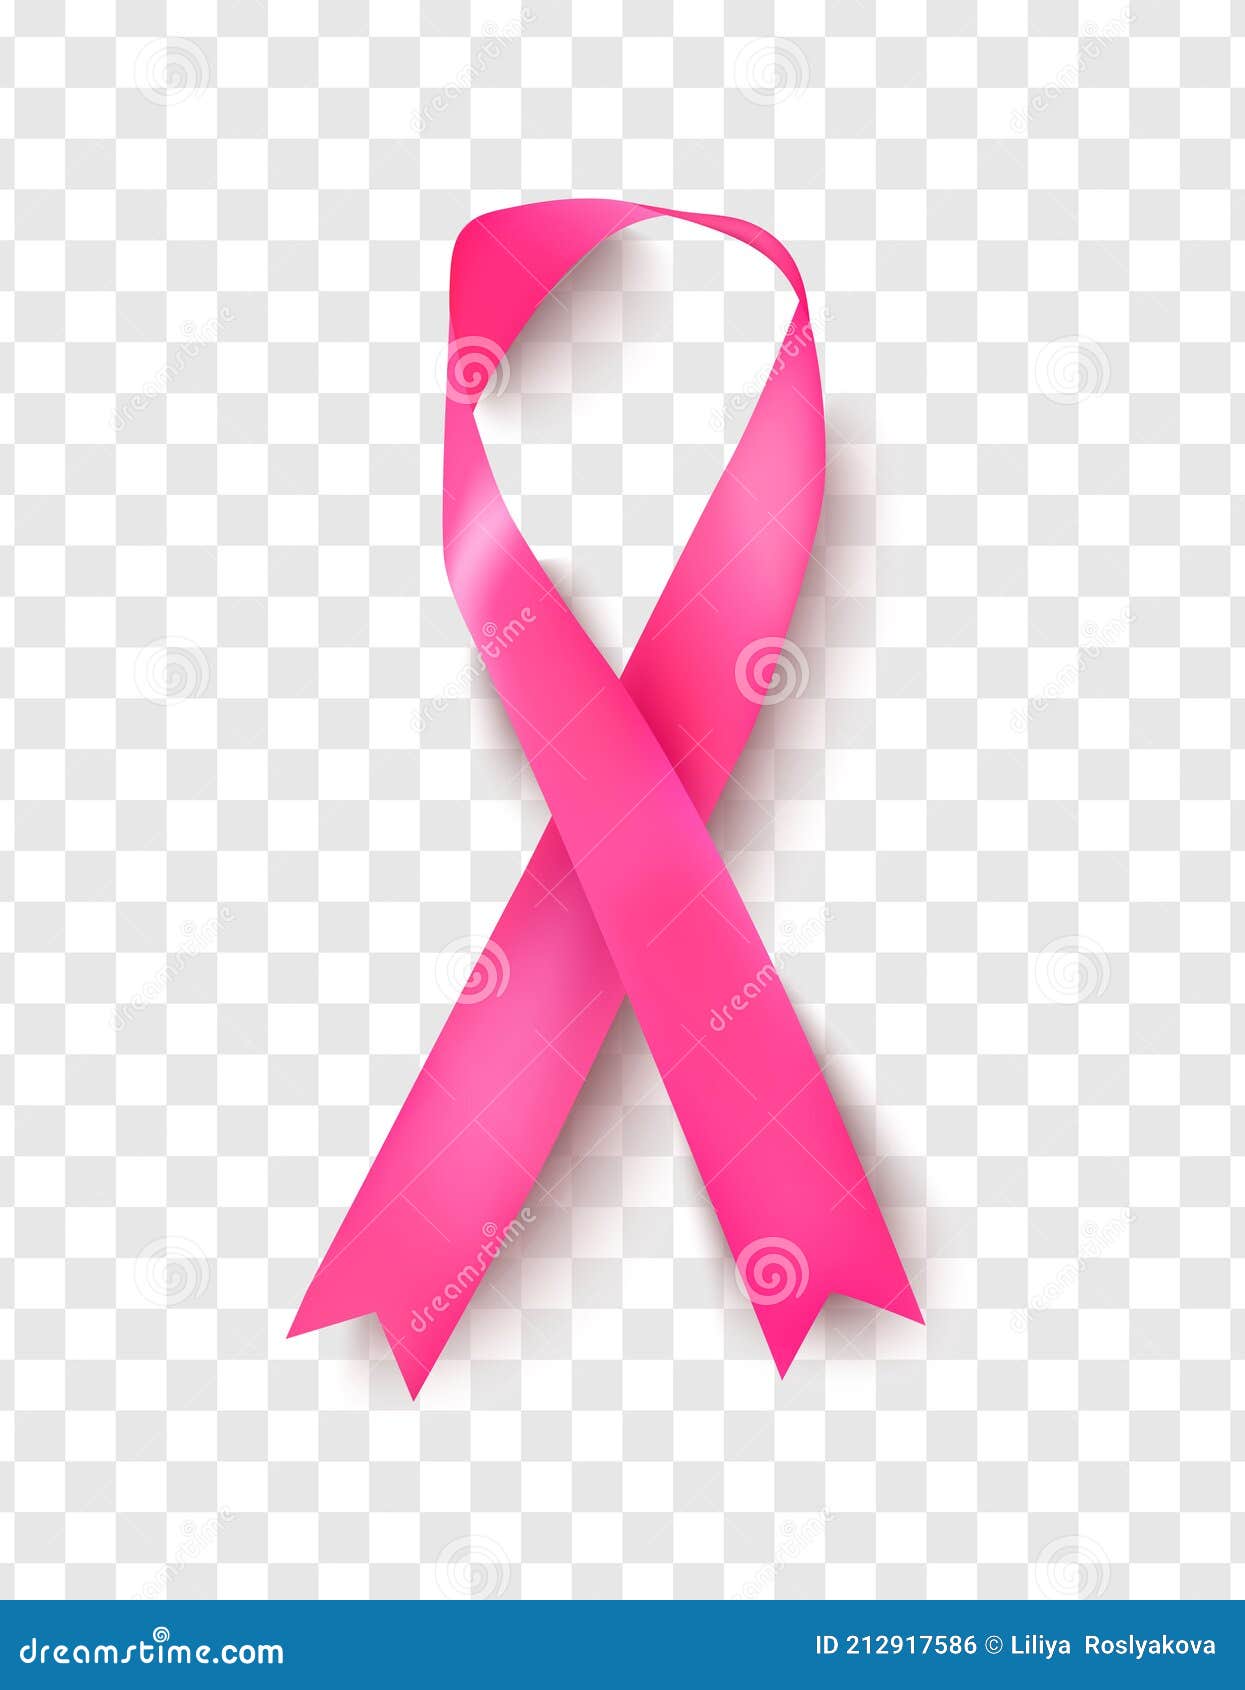 Pink Breast Cancer Awareness Ribbon on Transparent Background